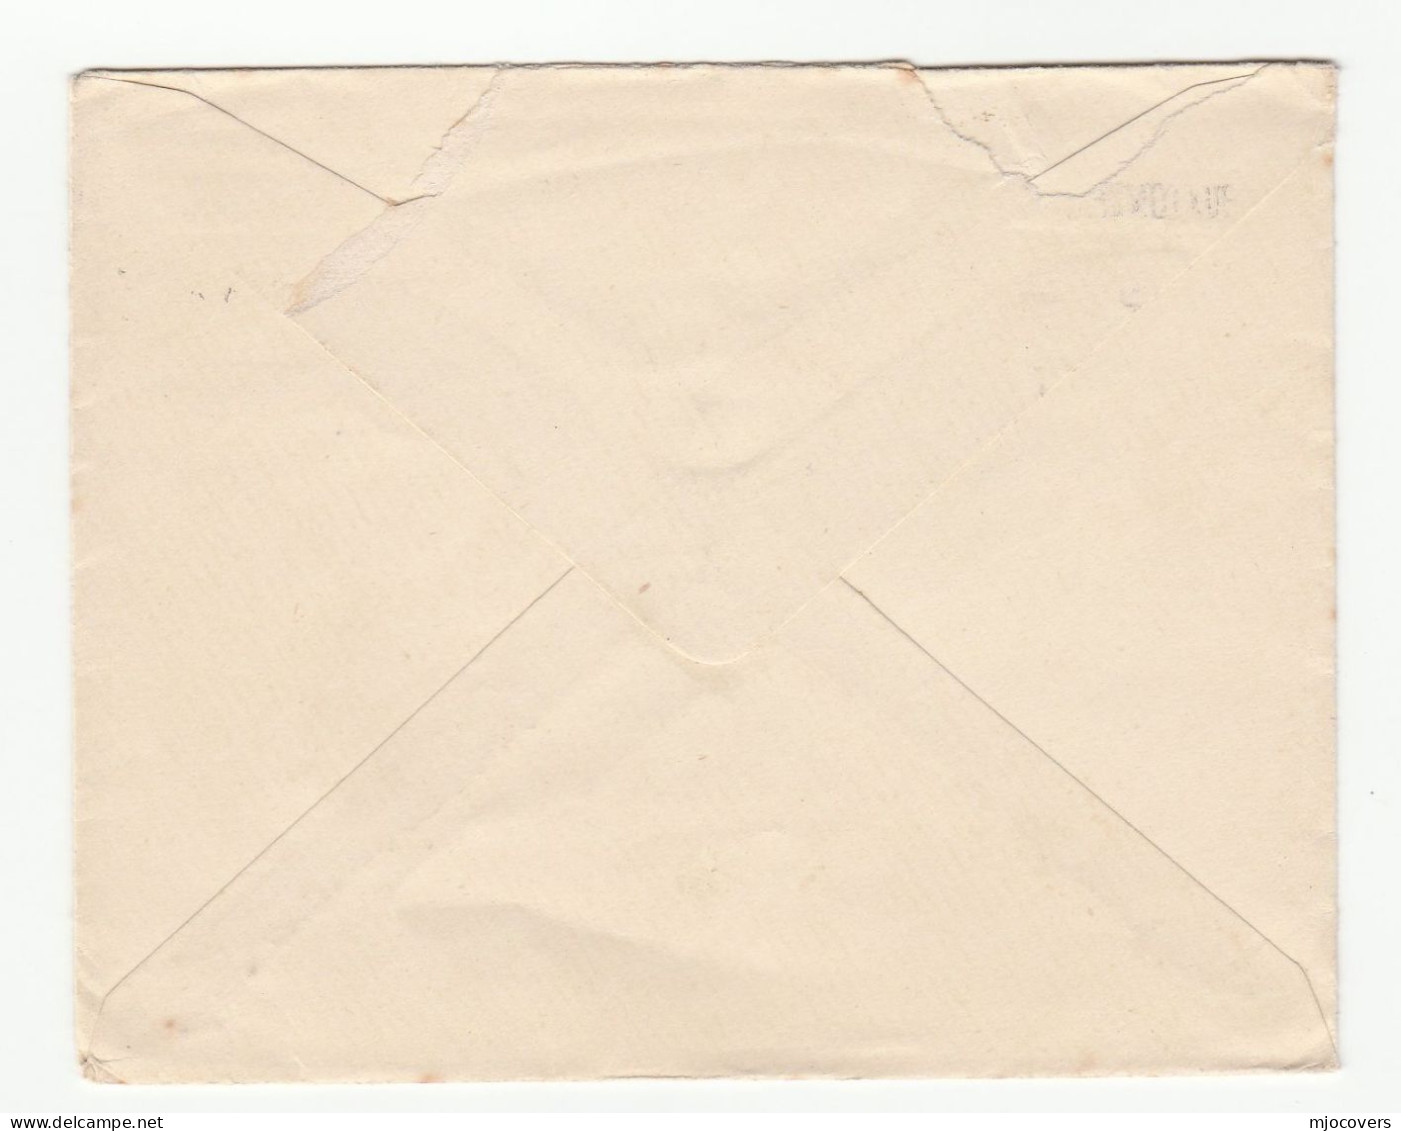 1927 Buxton Debys GB COVER Wavy Line Pmk  GV Stamps GB - Briefe U. Dokumente